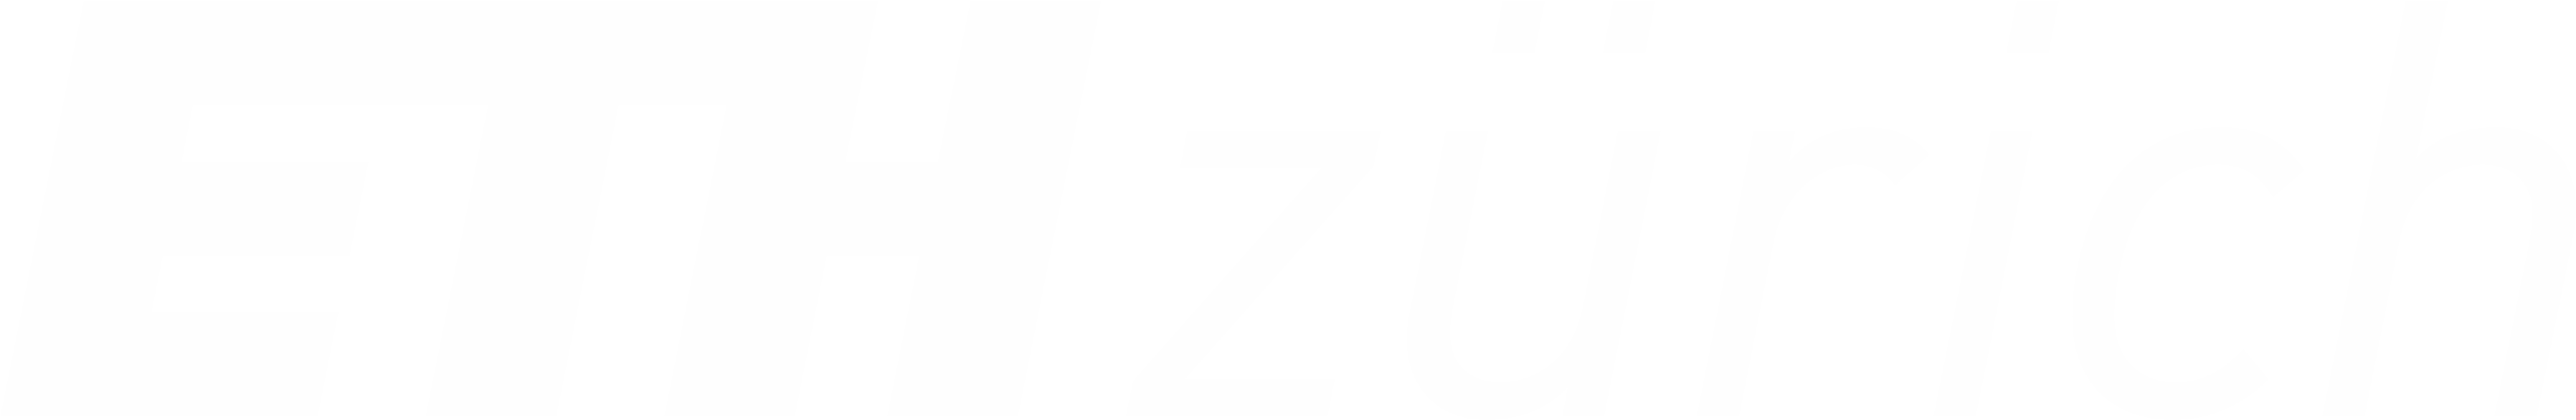 Black and white logo of ETH Zurich